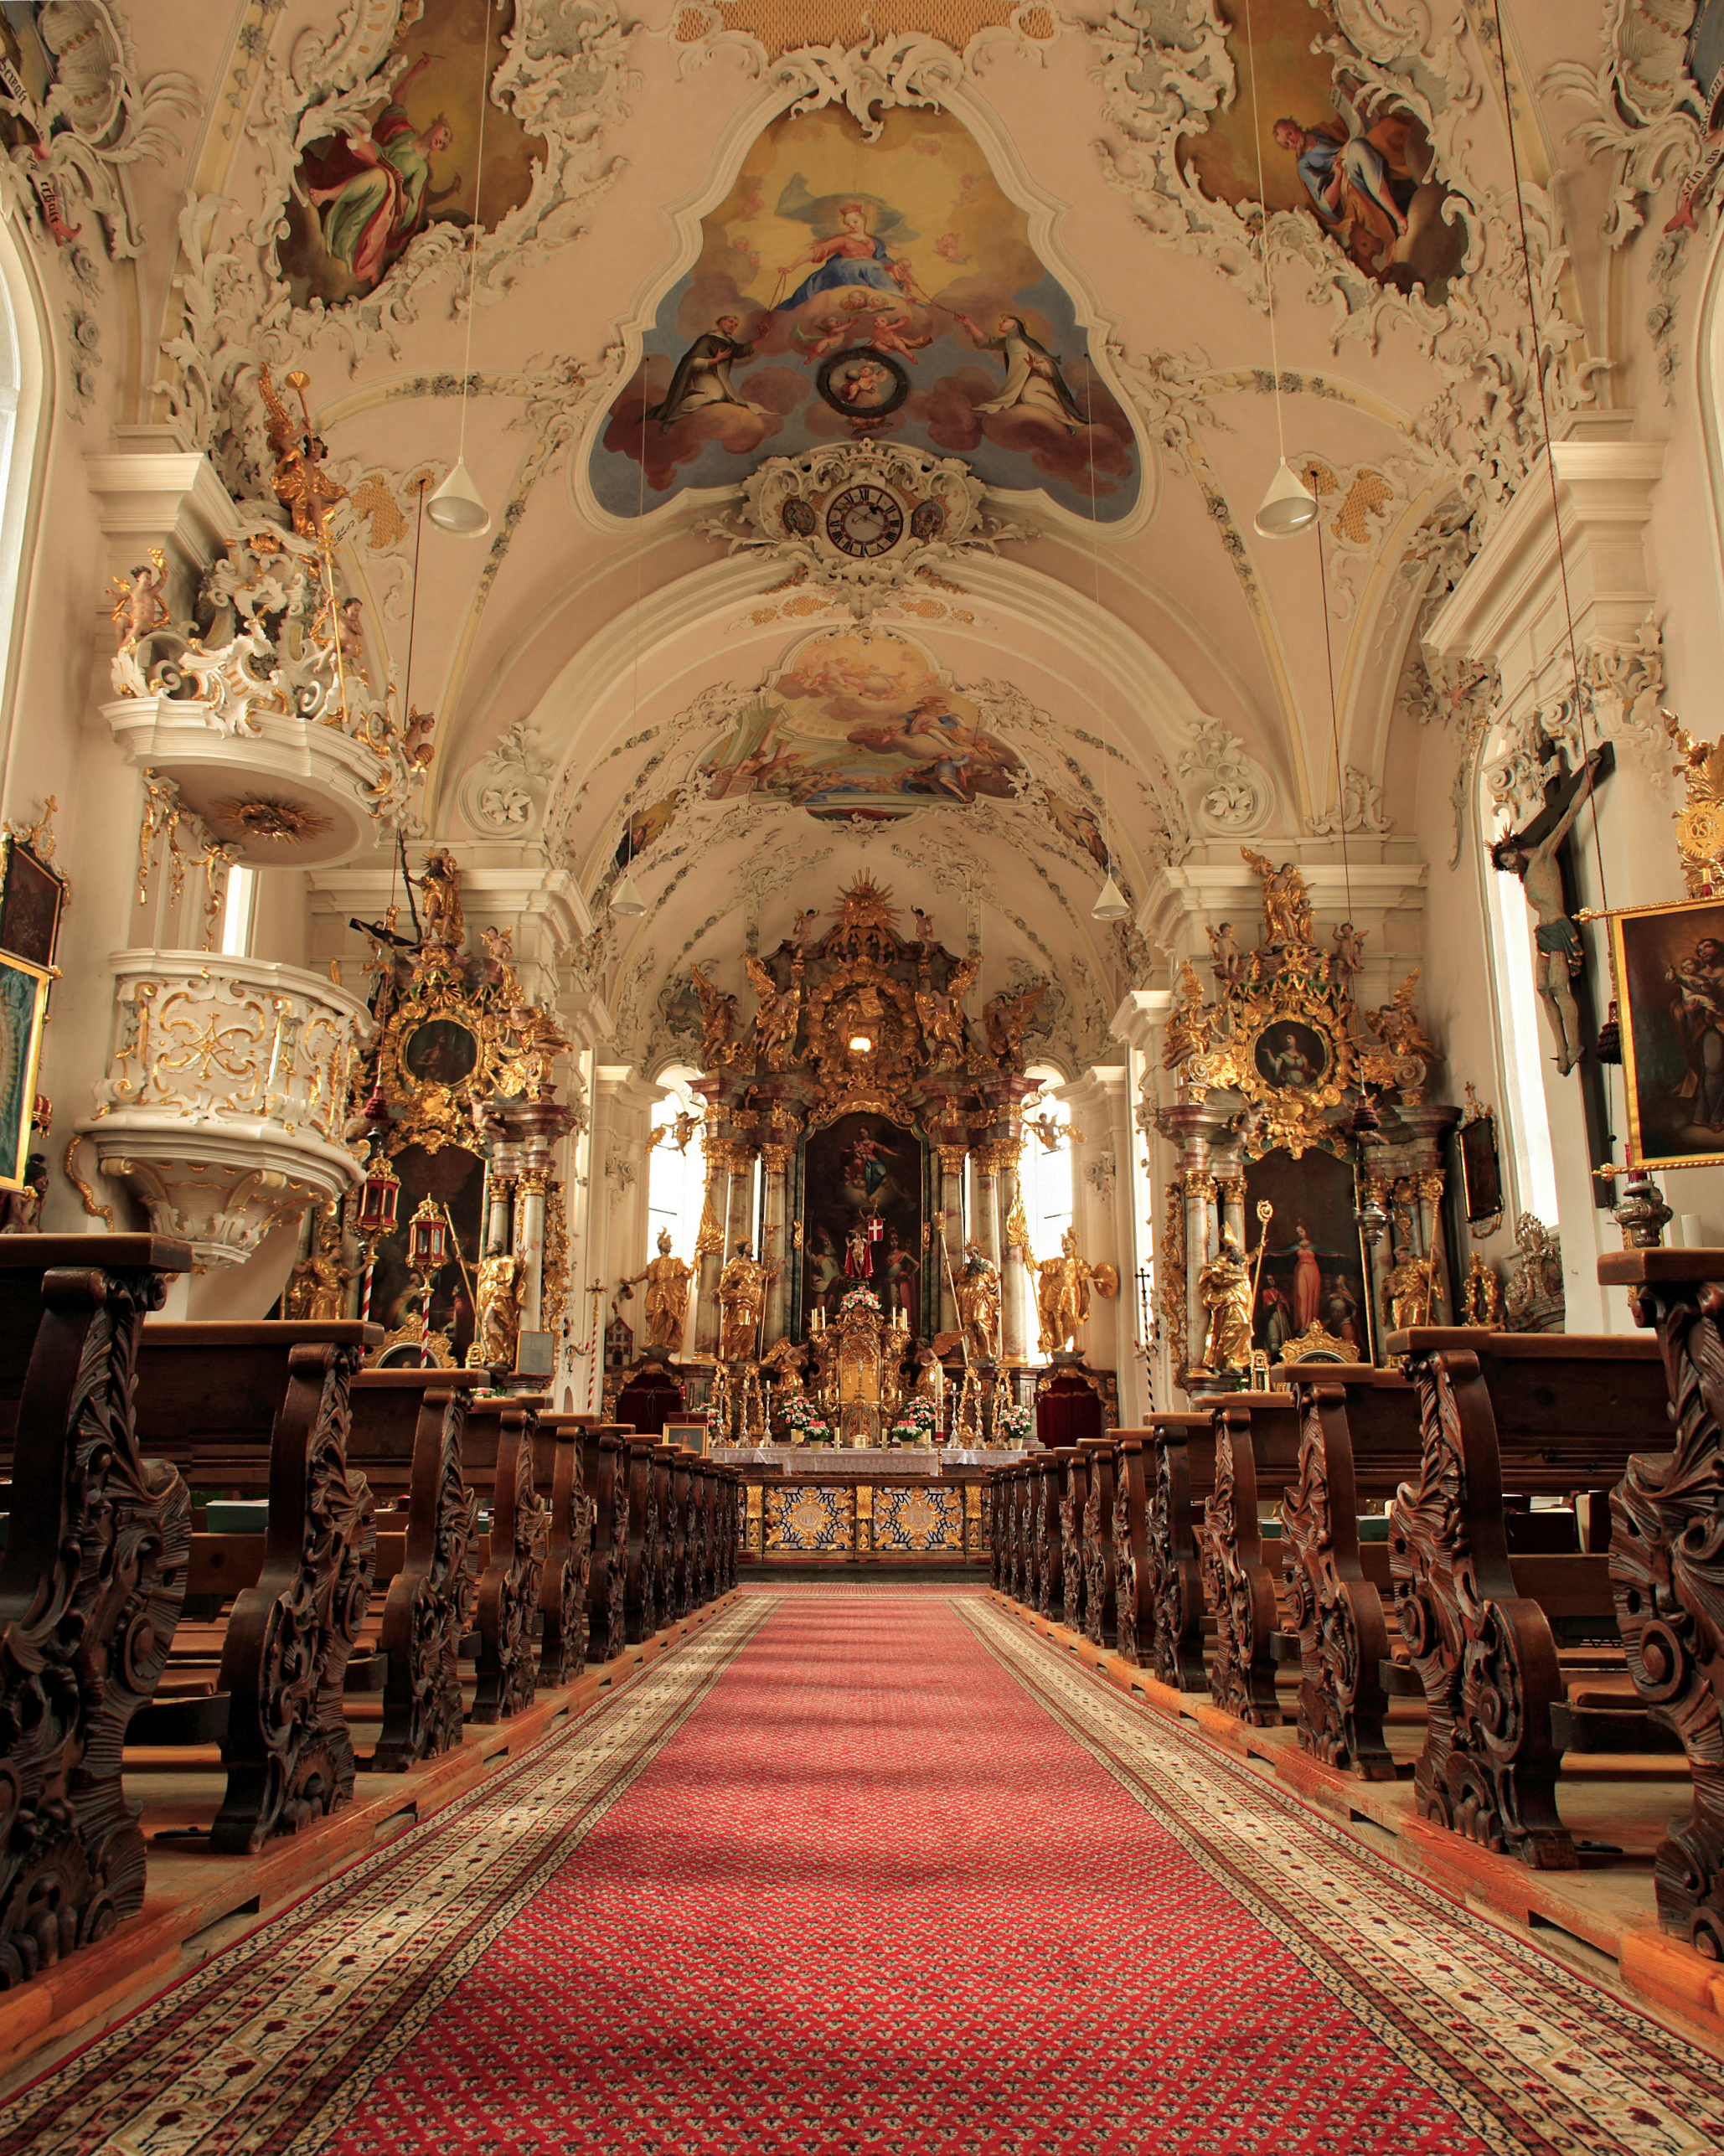 File:Ischgl church interior from below 2.jpg - Wikimedia Commons